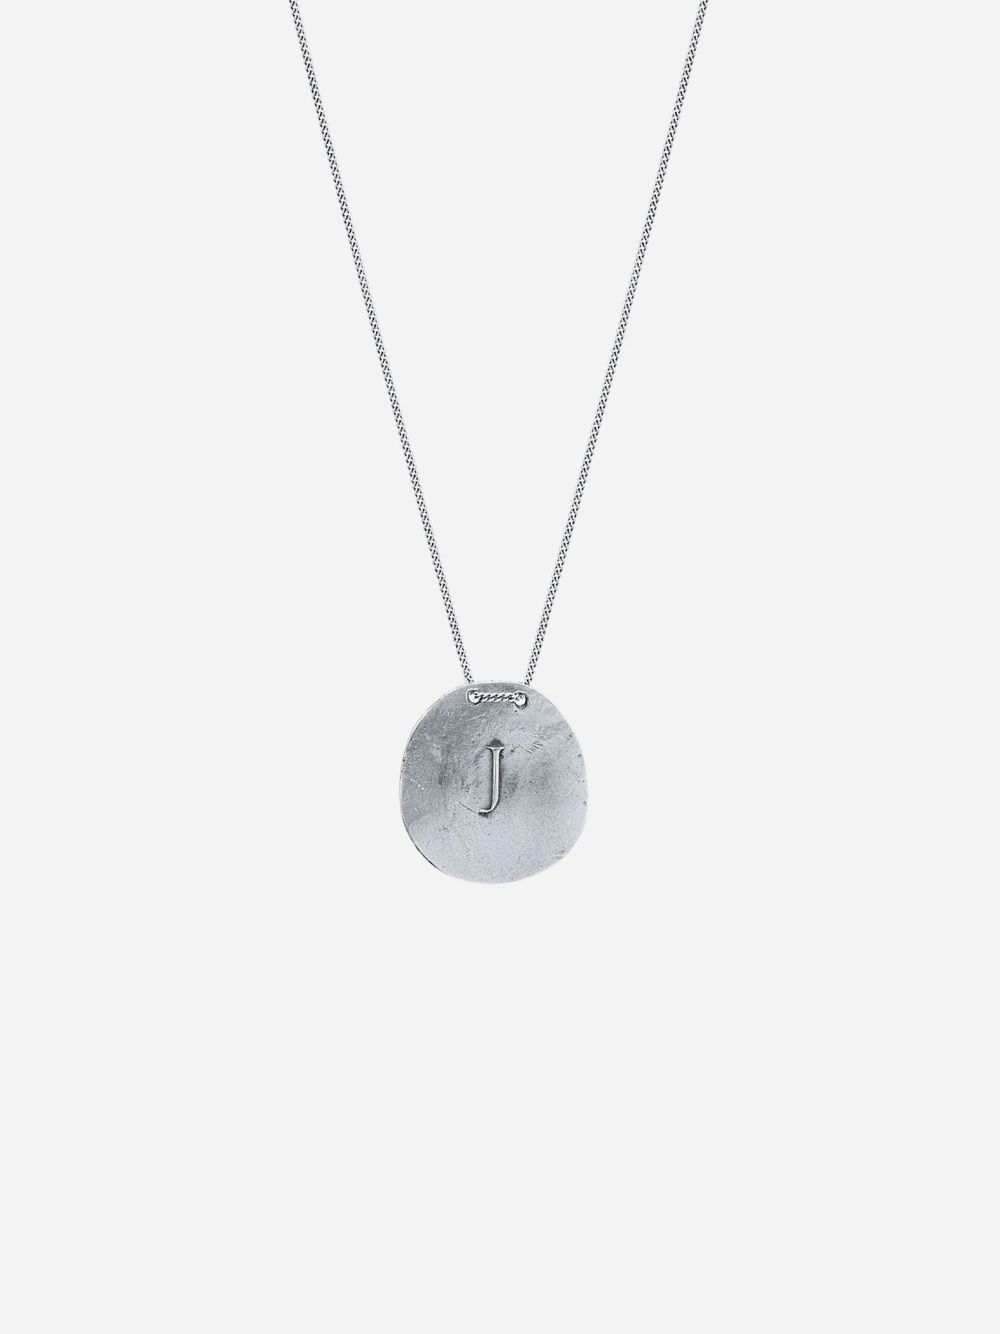 Silver J Necklace